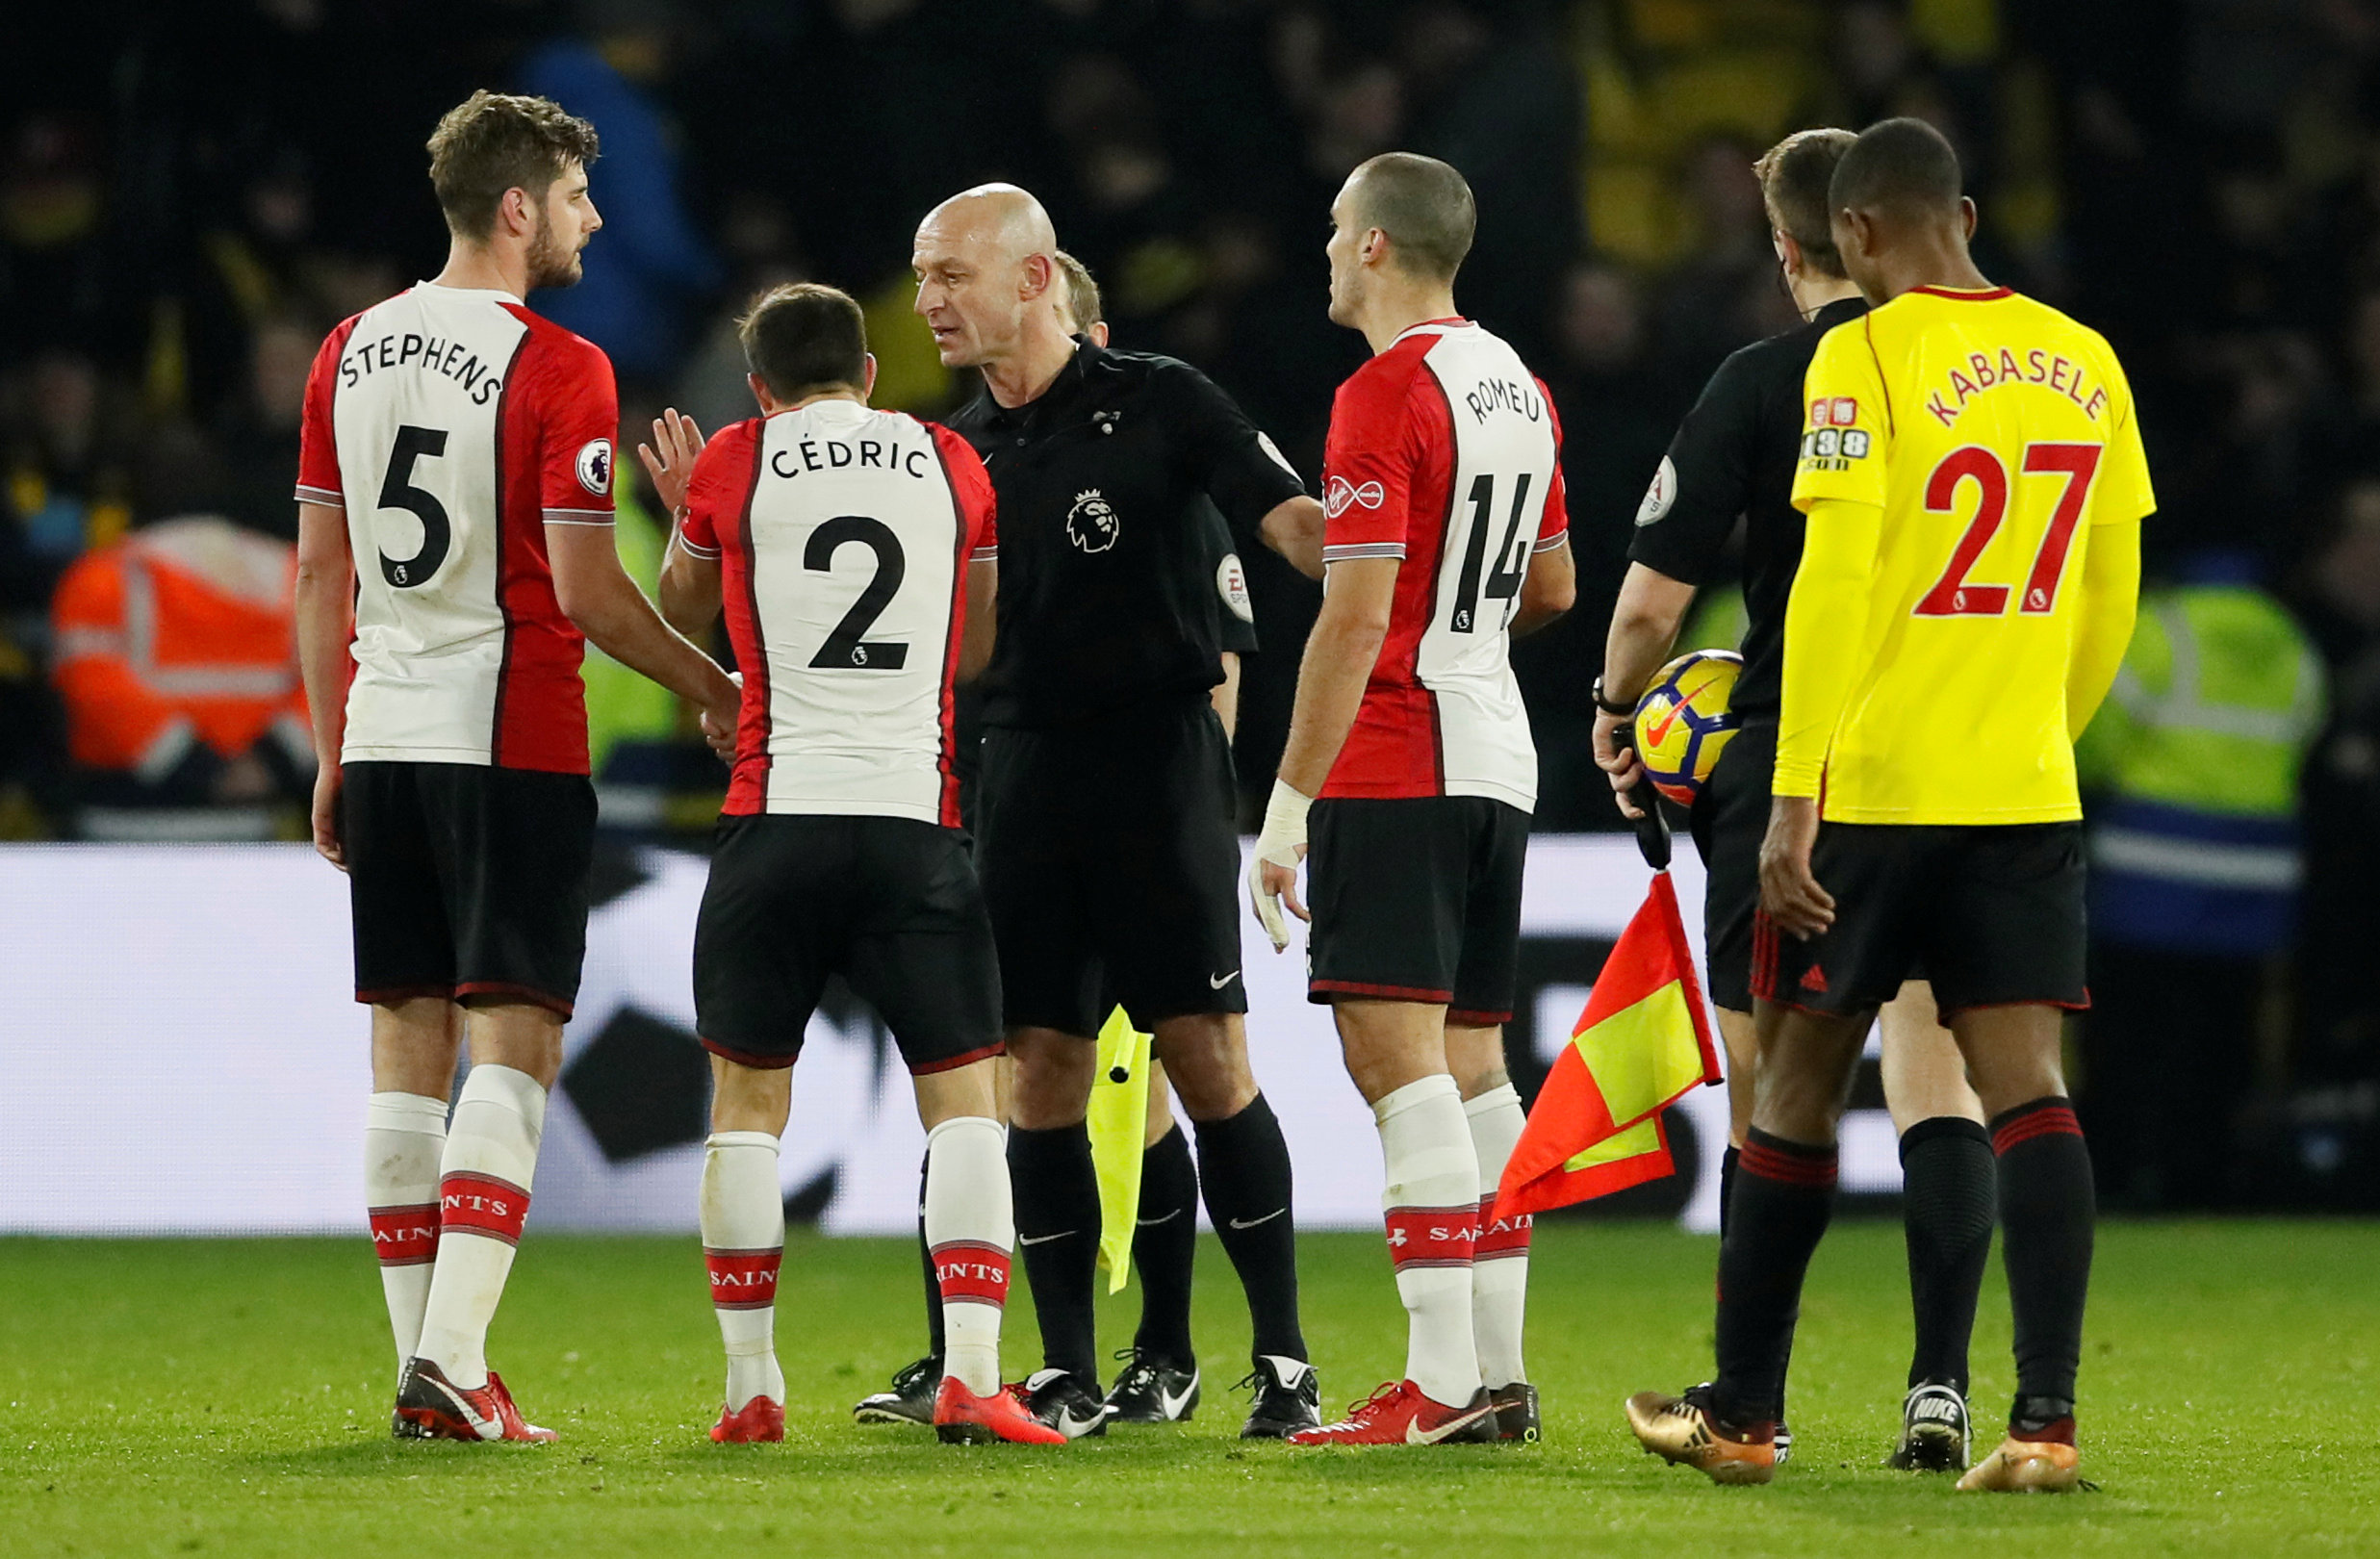 Football: Watford earn late draw against Southampton